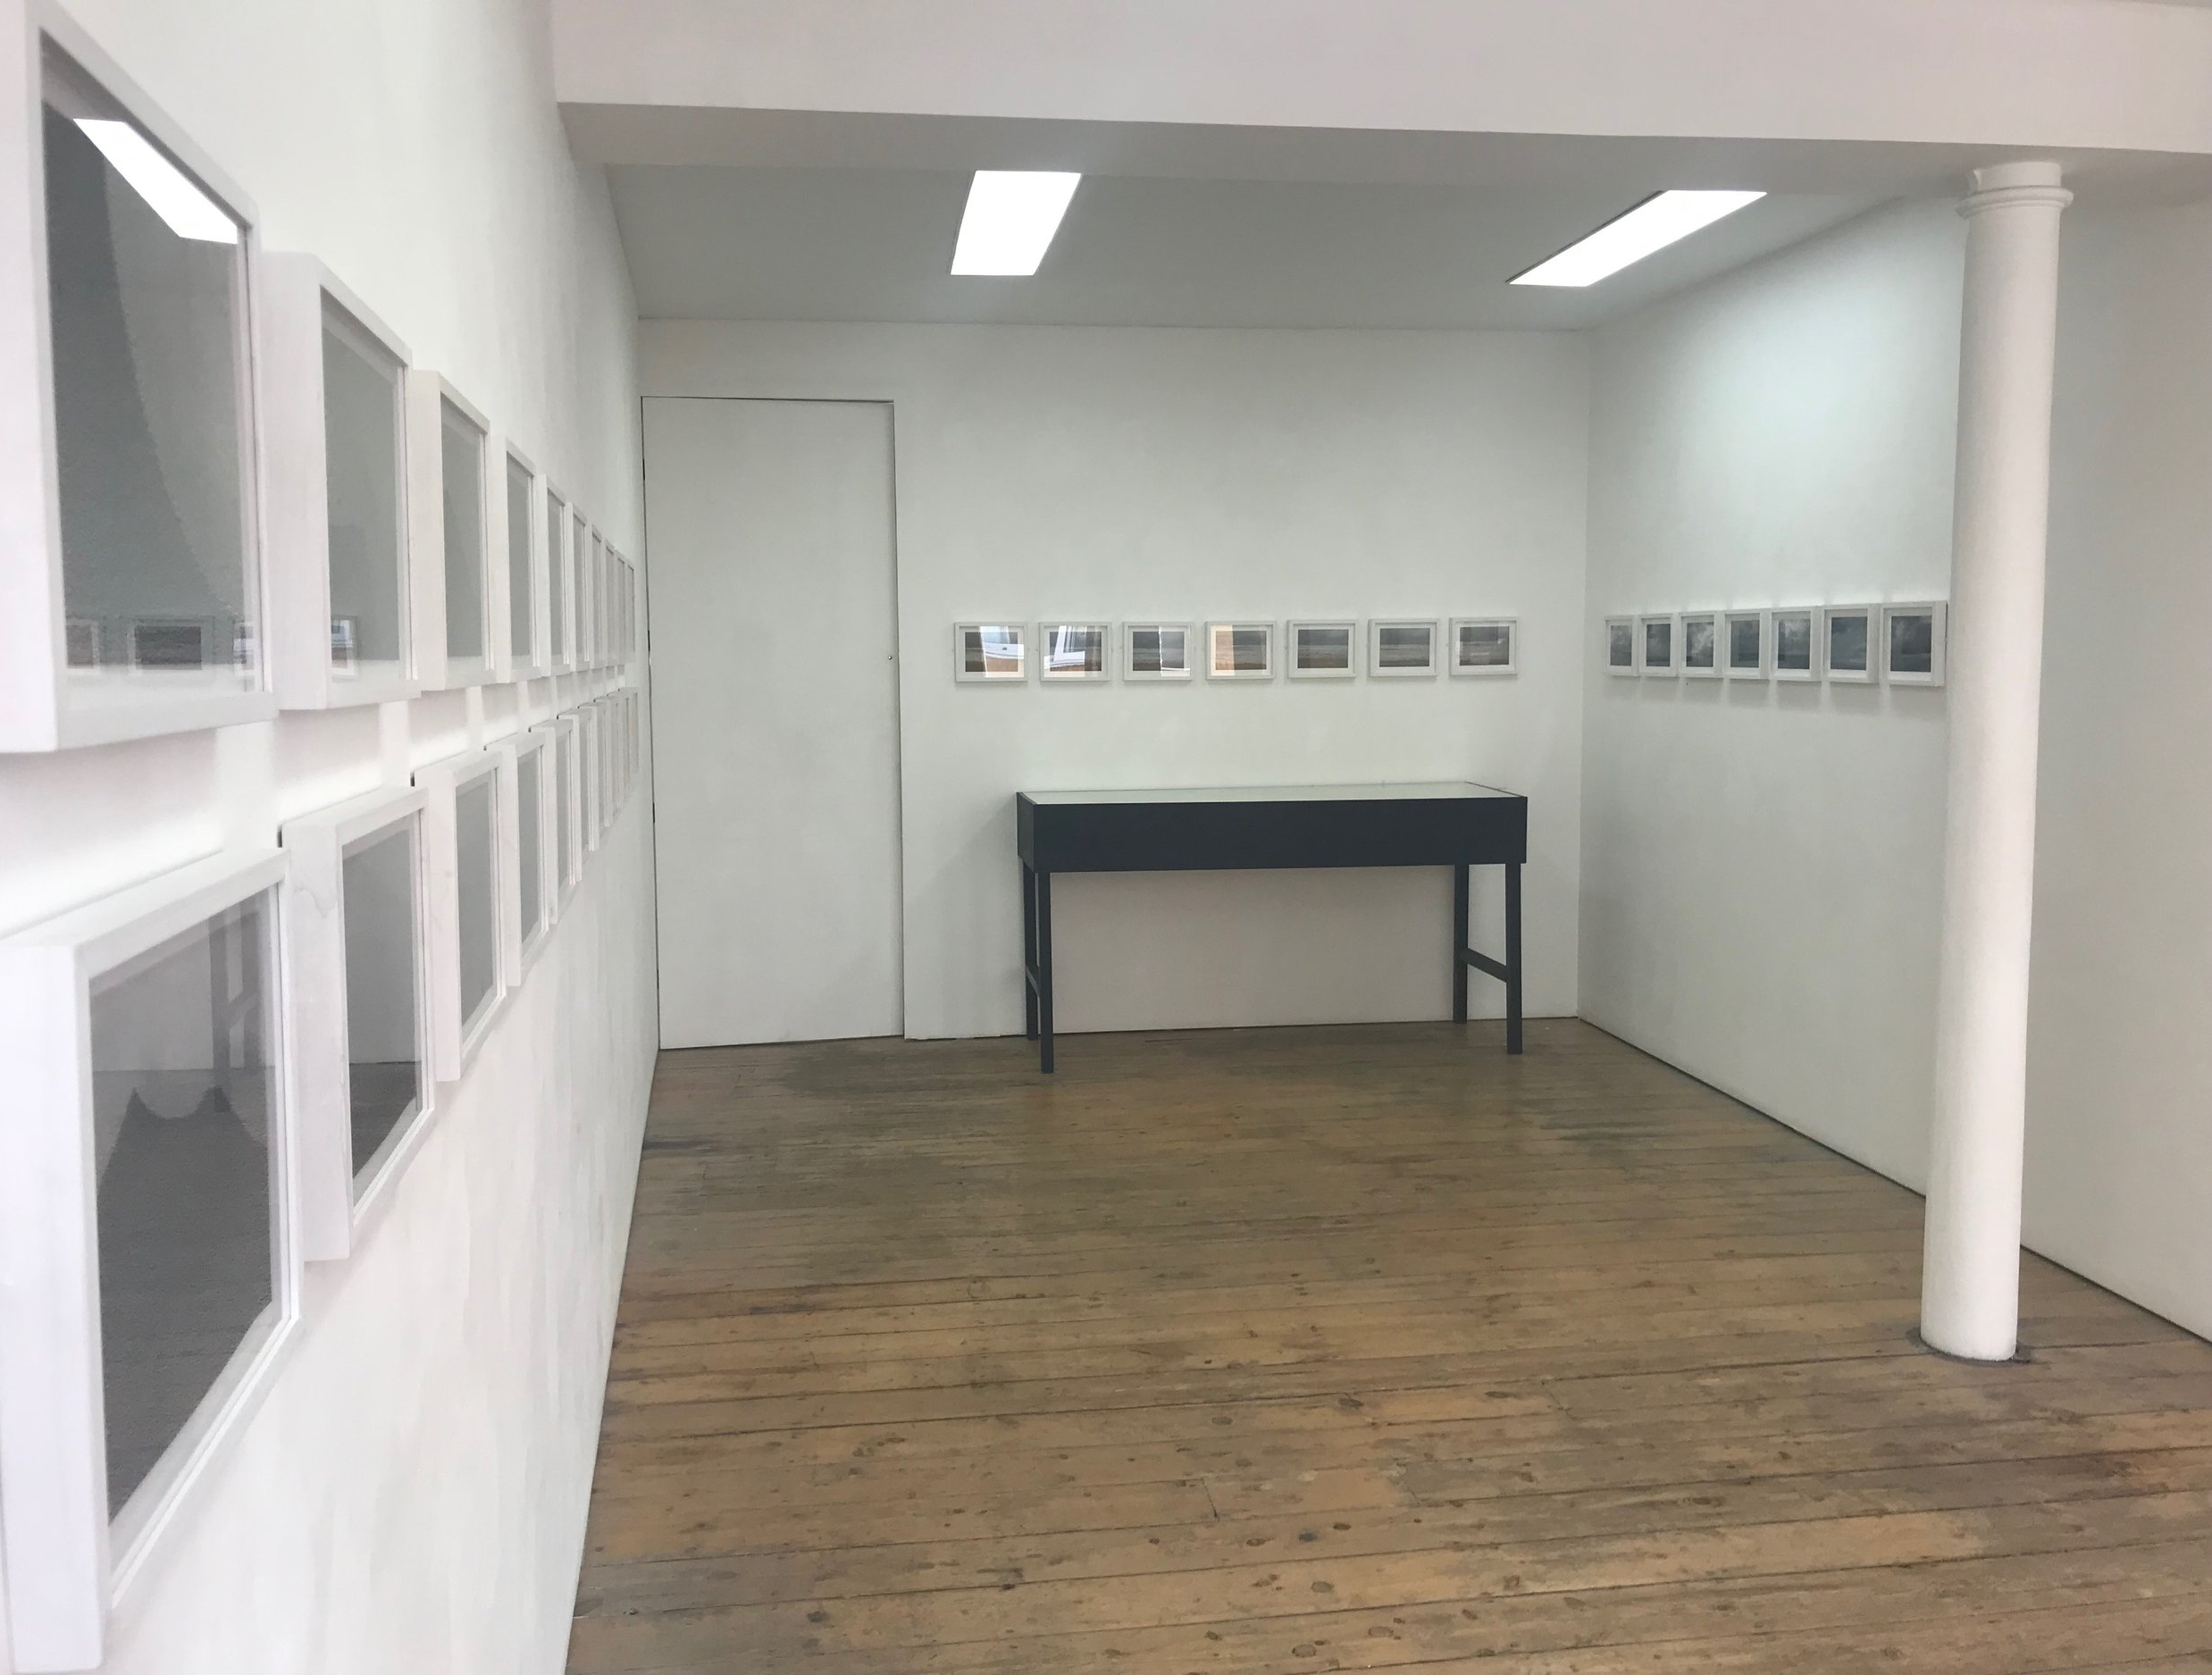  first floor gallery 